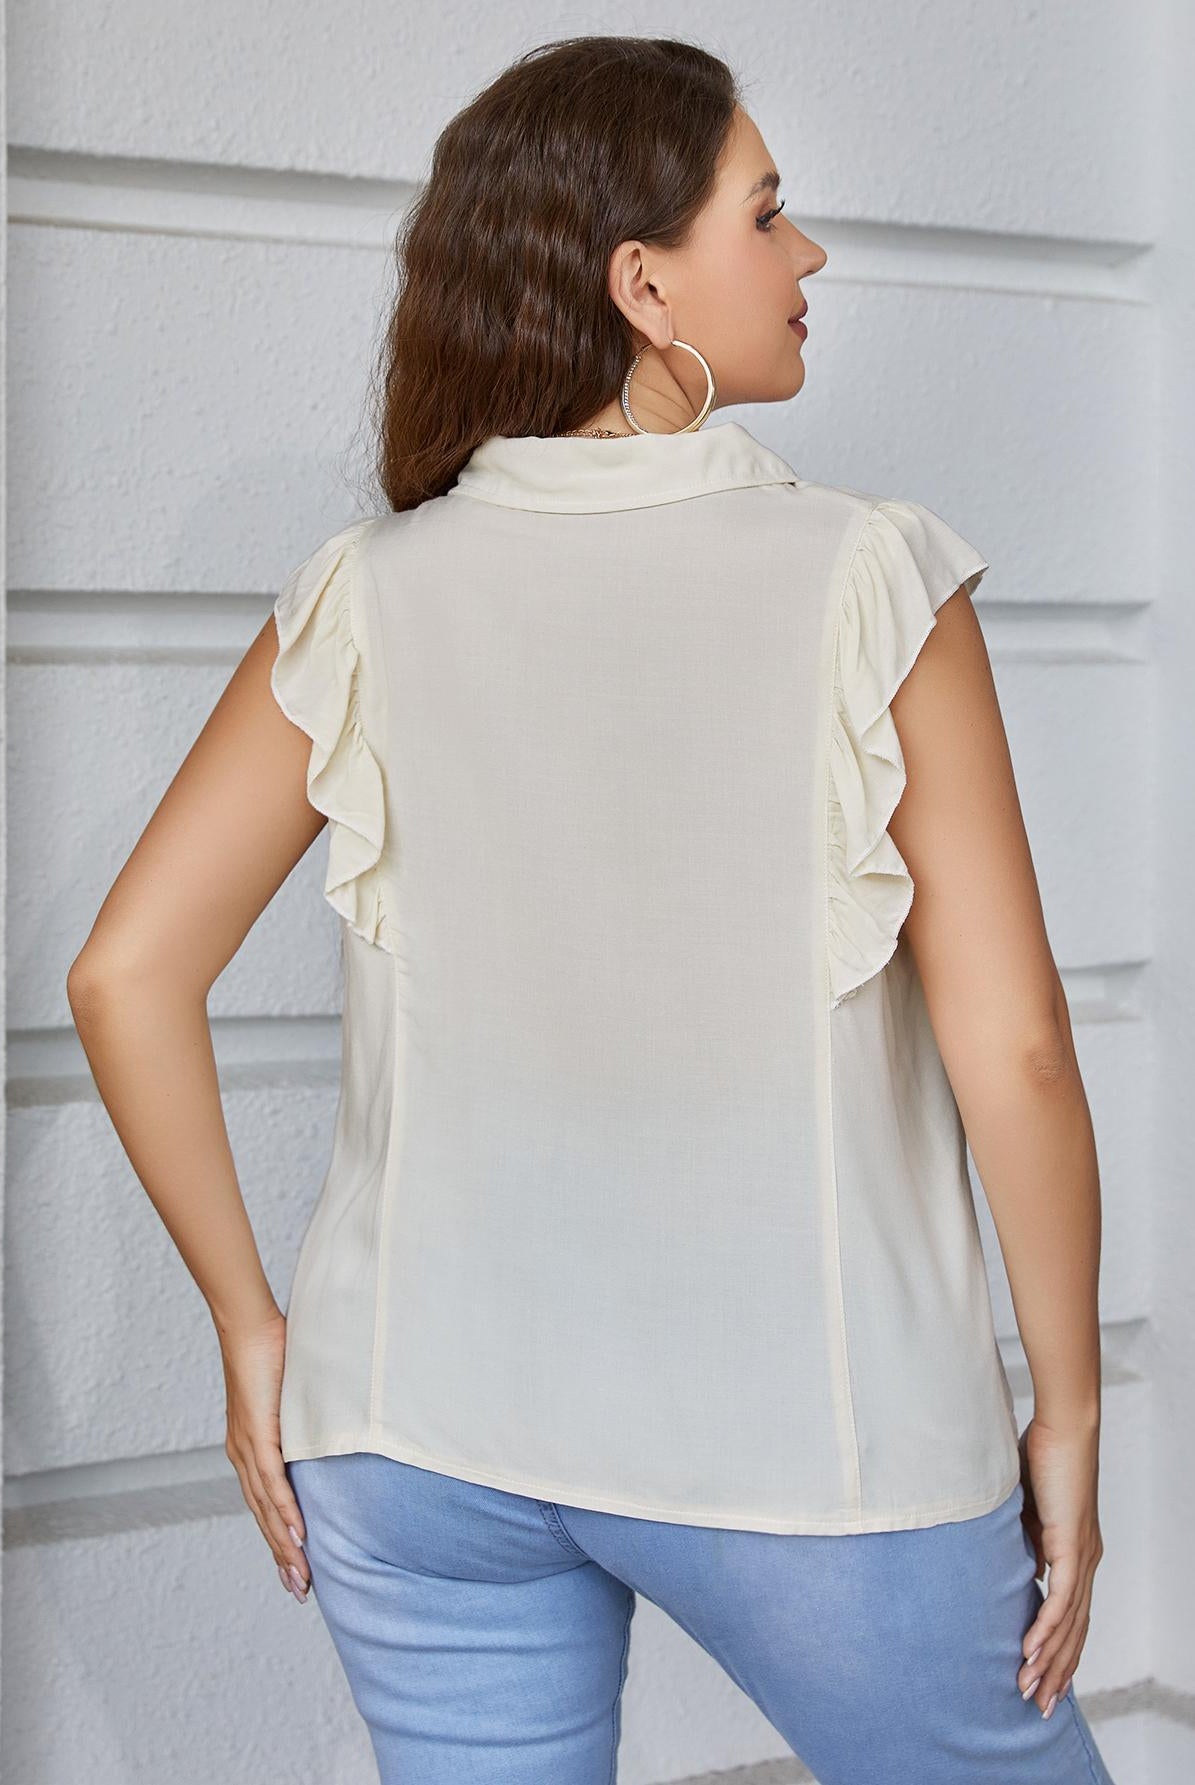 Gray Unlock Elegance Plus Size Ruffled Cap Sleeve Shirt Plus Size Tops